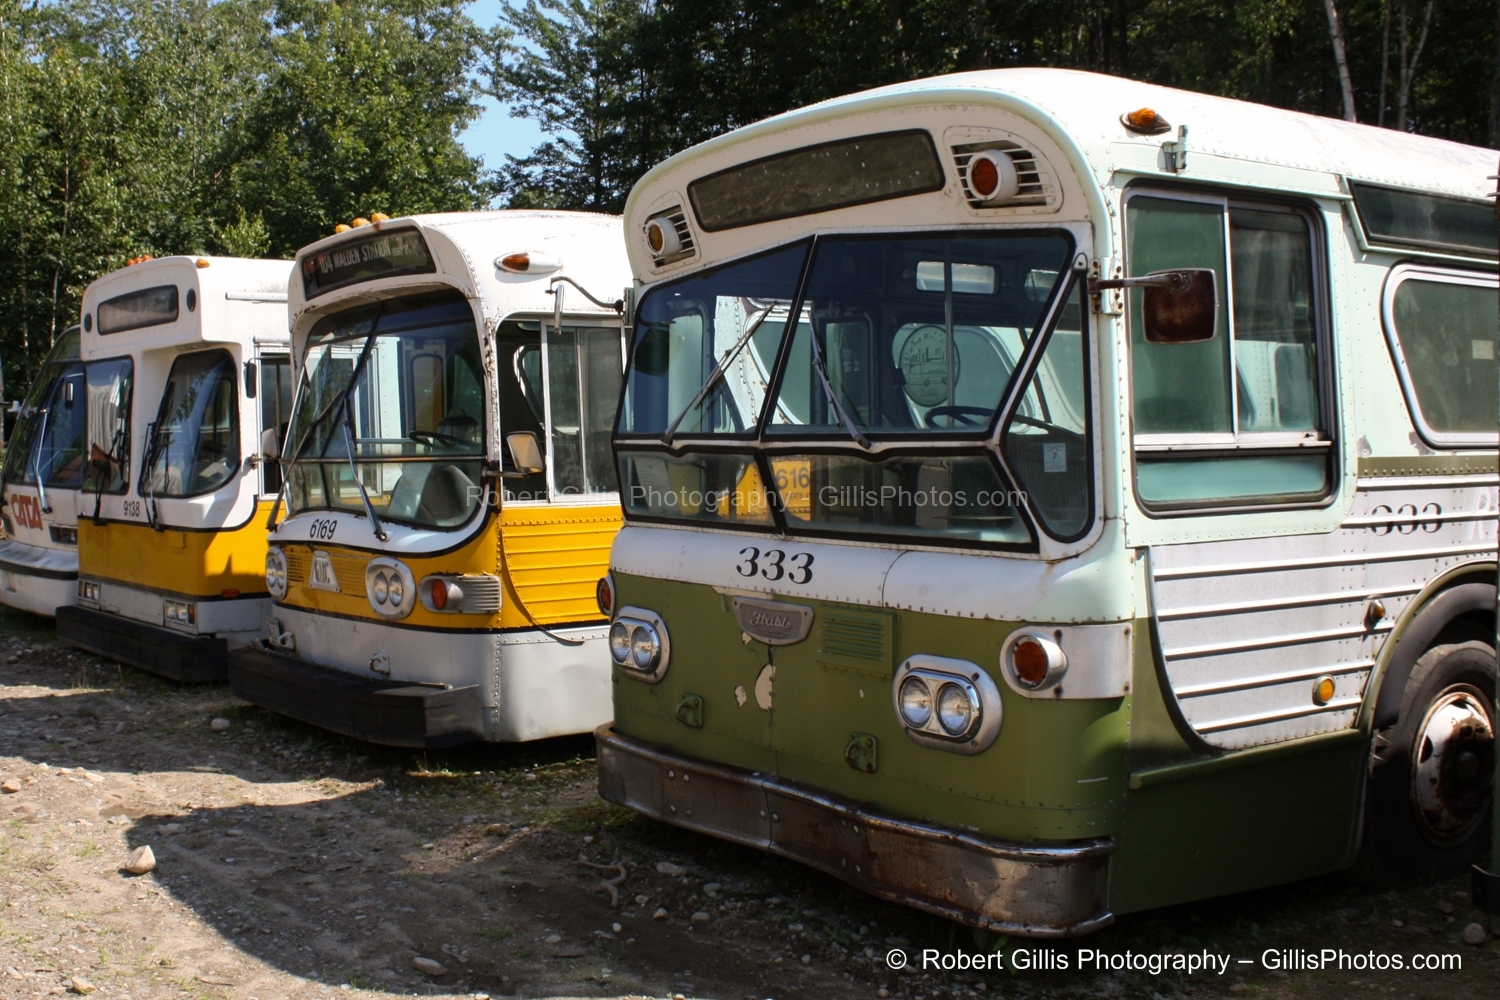 10 Seashore Trolley Museum - Bus collection_